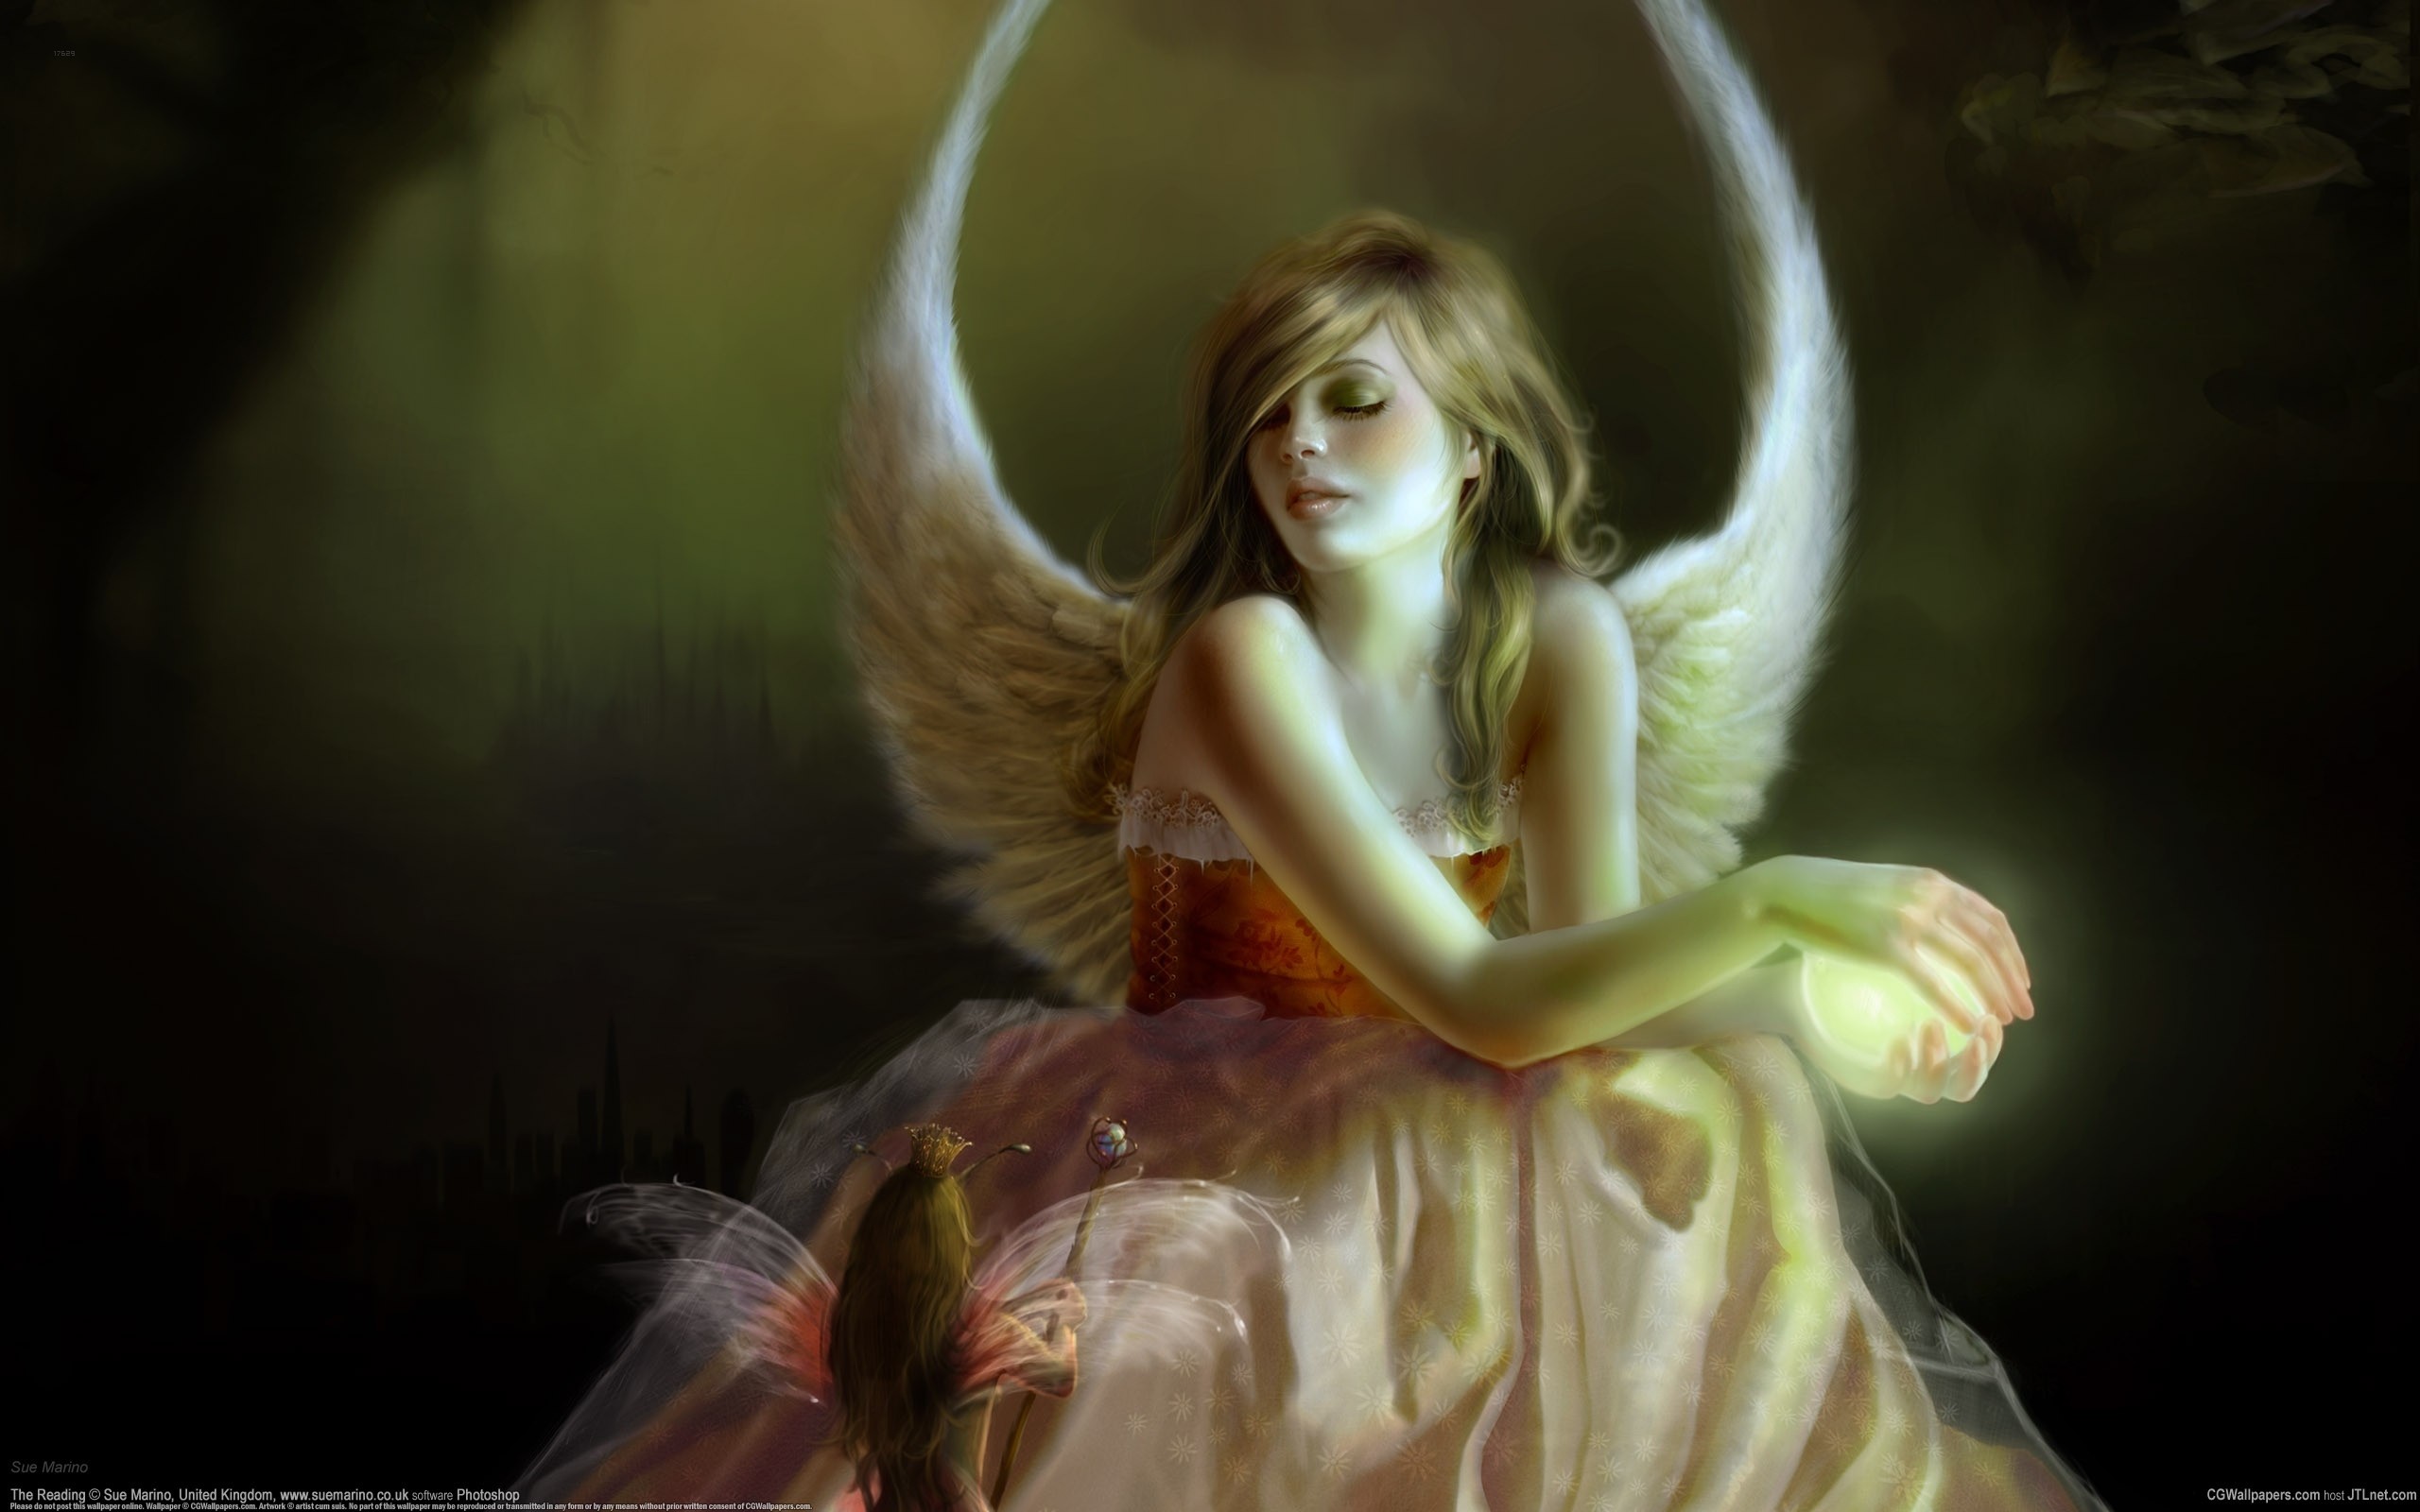 General 2560x1600 angel fantasy art artwork women makeup wings dress fantasy girl long hair Sue Marino digital art watermarked